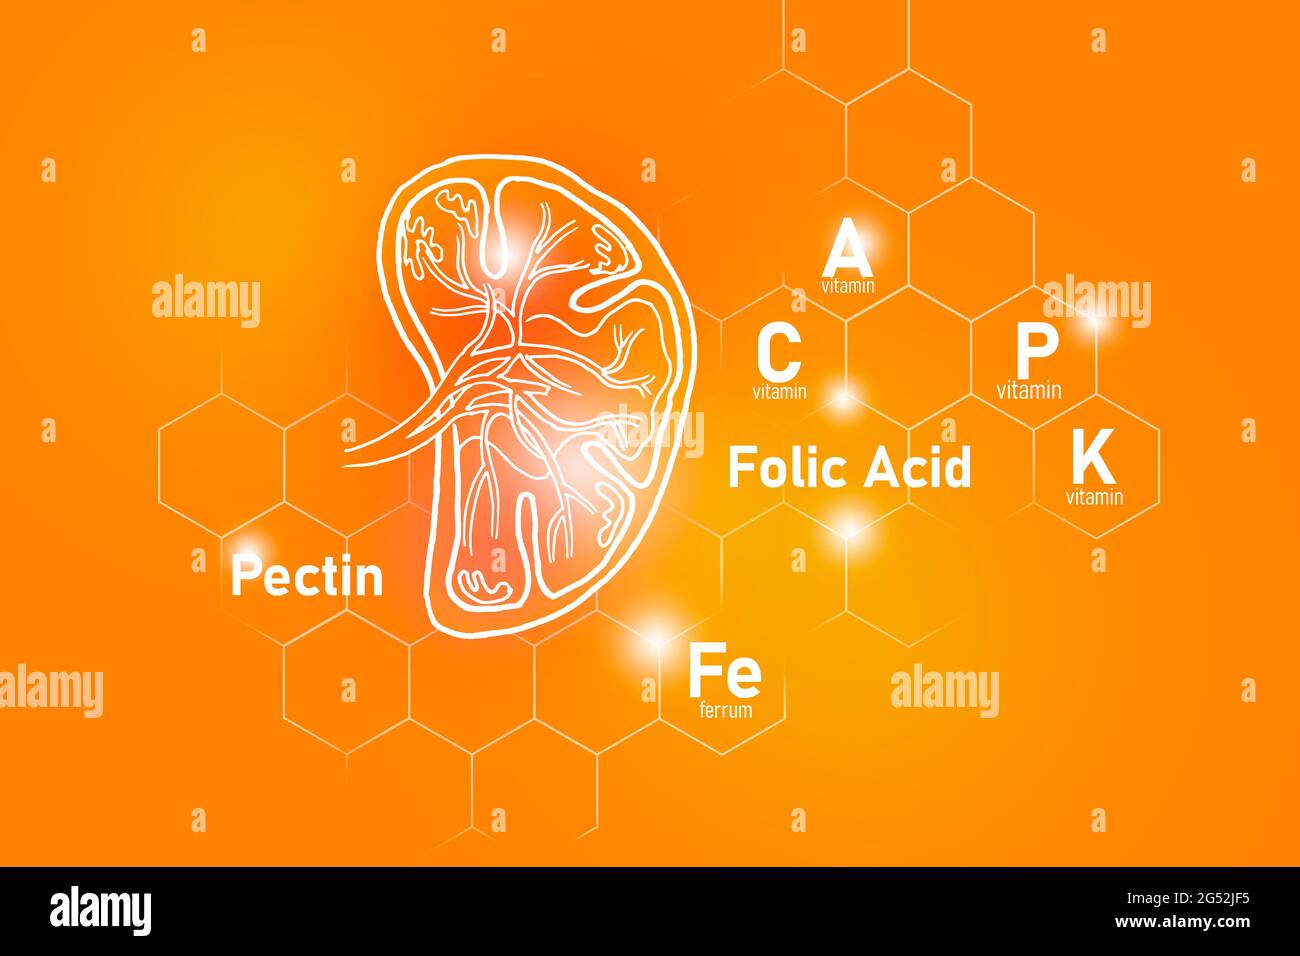 Essential nutrients for Spleen health including Pectin, Folic Acid, Vitamin P, Ferrum.Design set of main human organs on positive orange background. Stock Photo